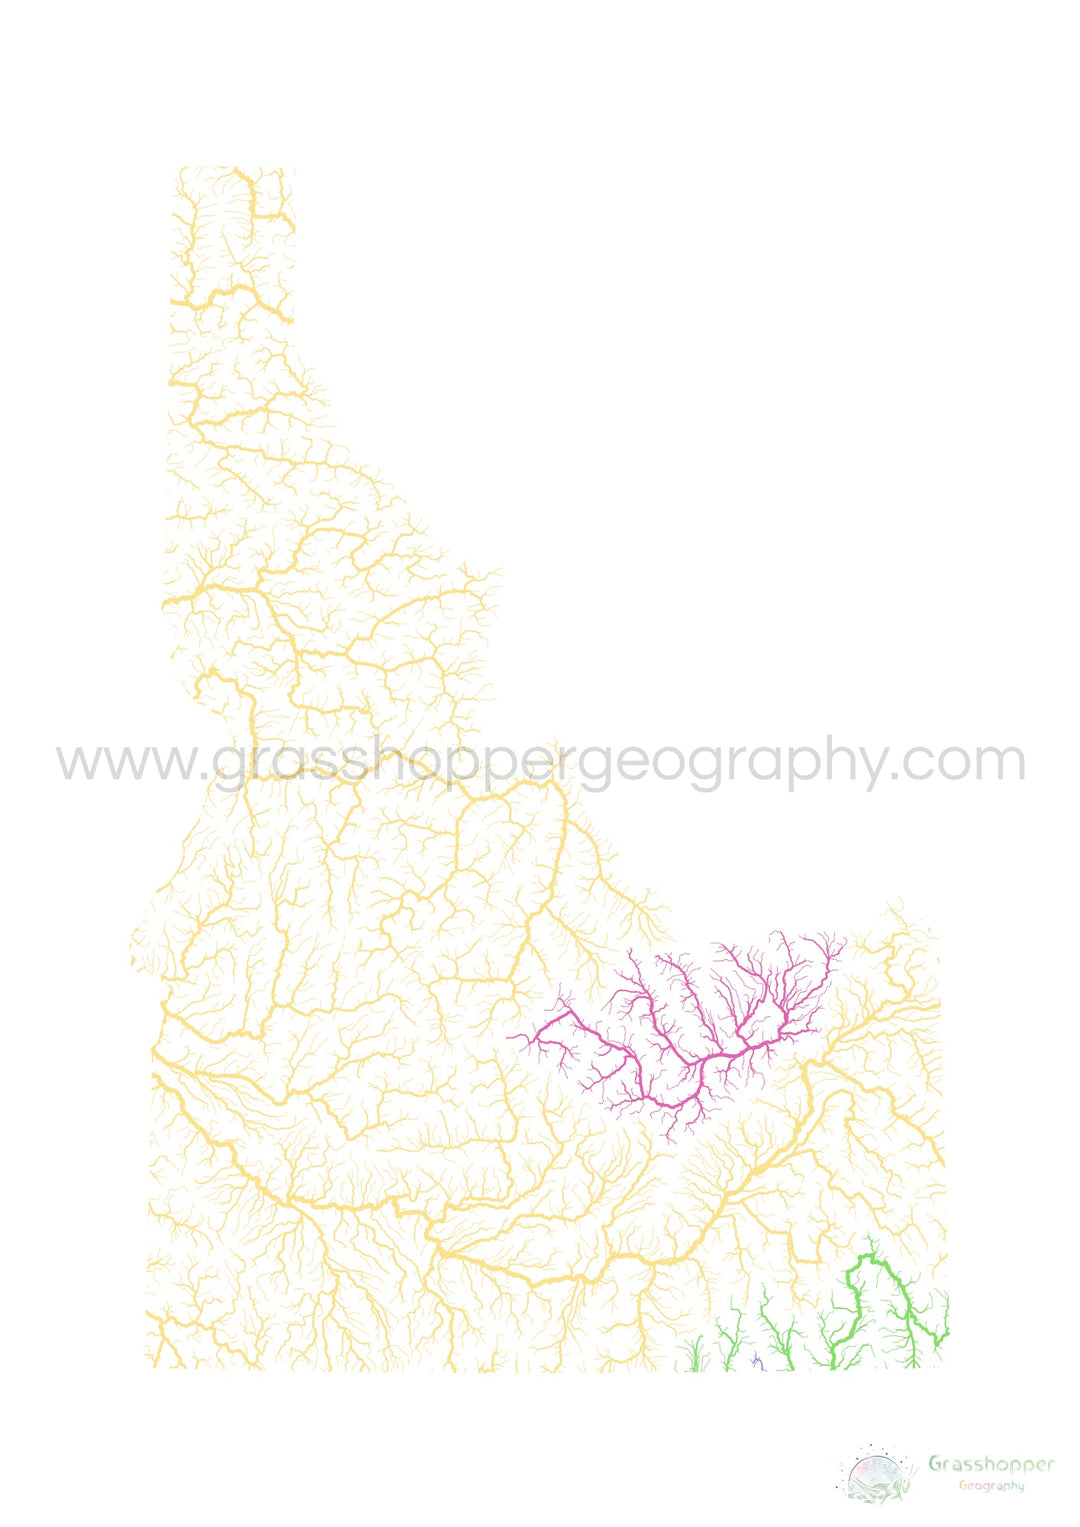 Idaho - Carte du bassin fluvial, pastel sur blanc - Fine Art Print